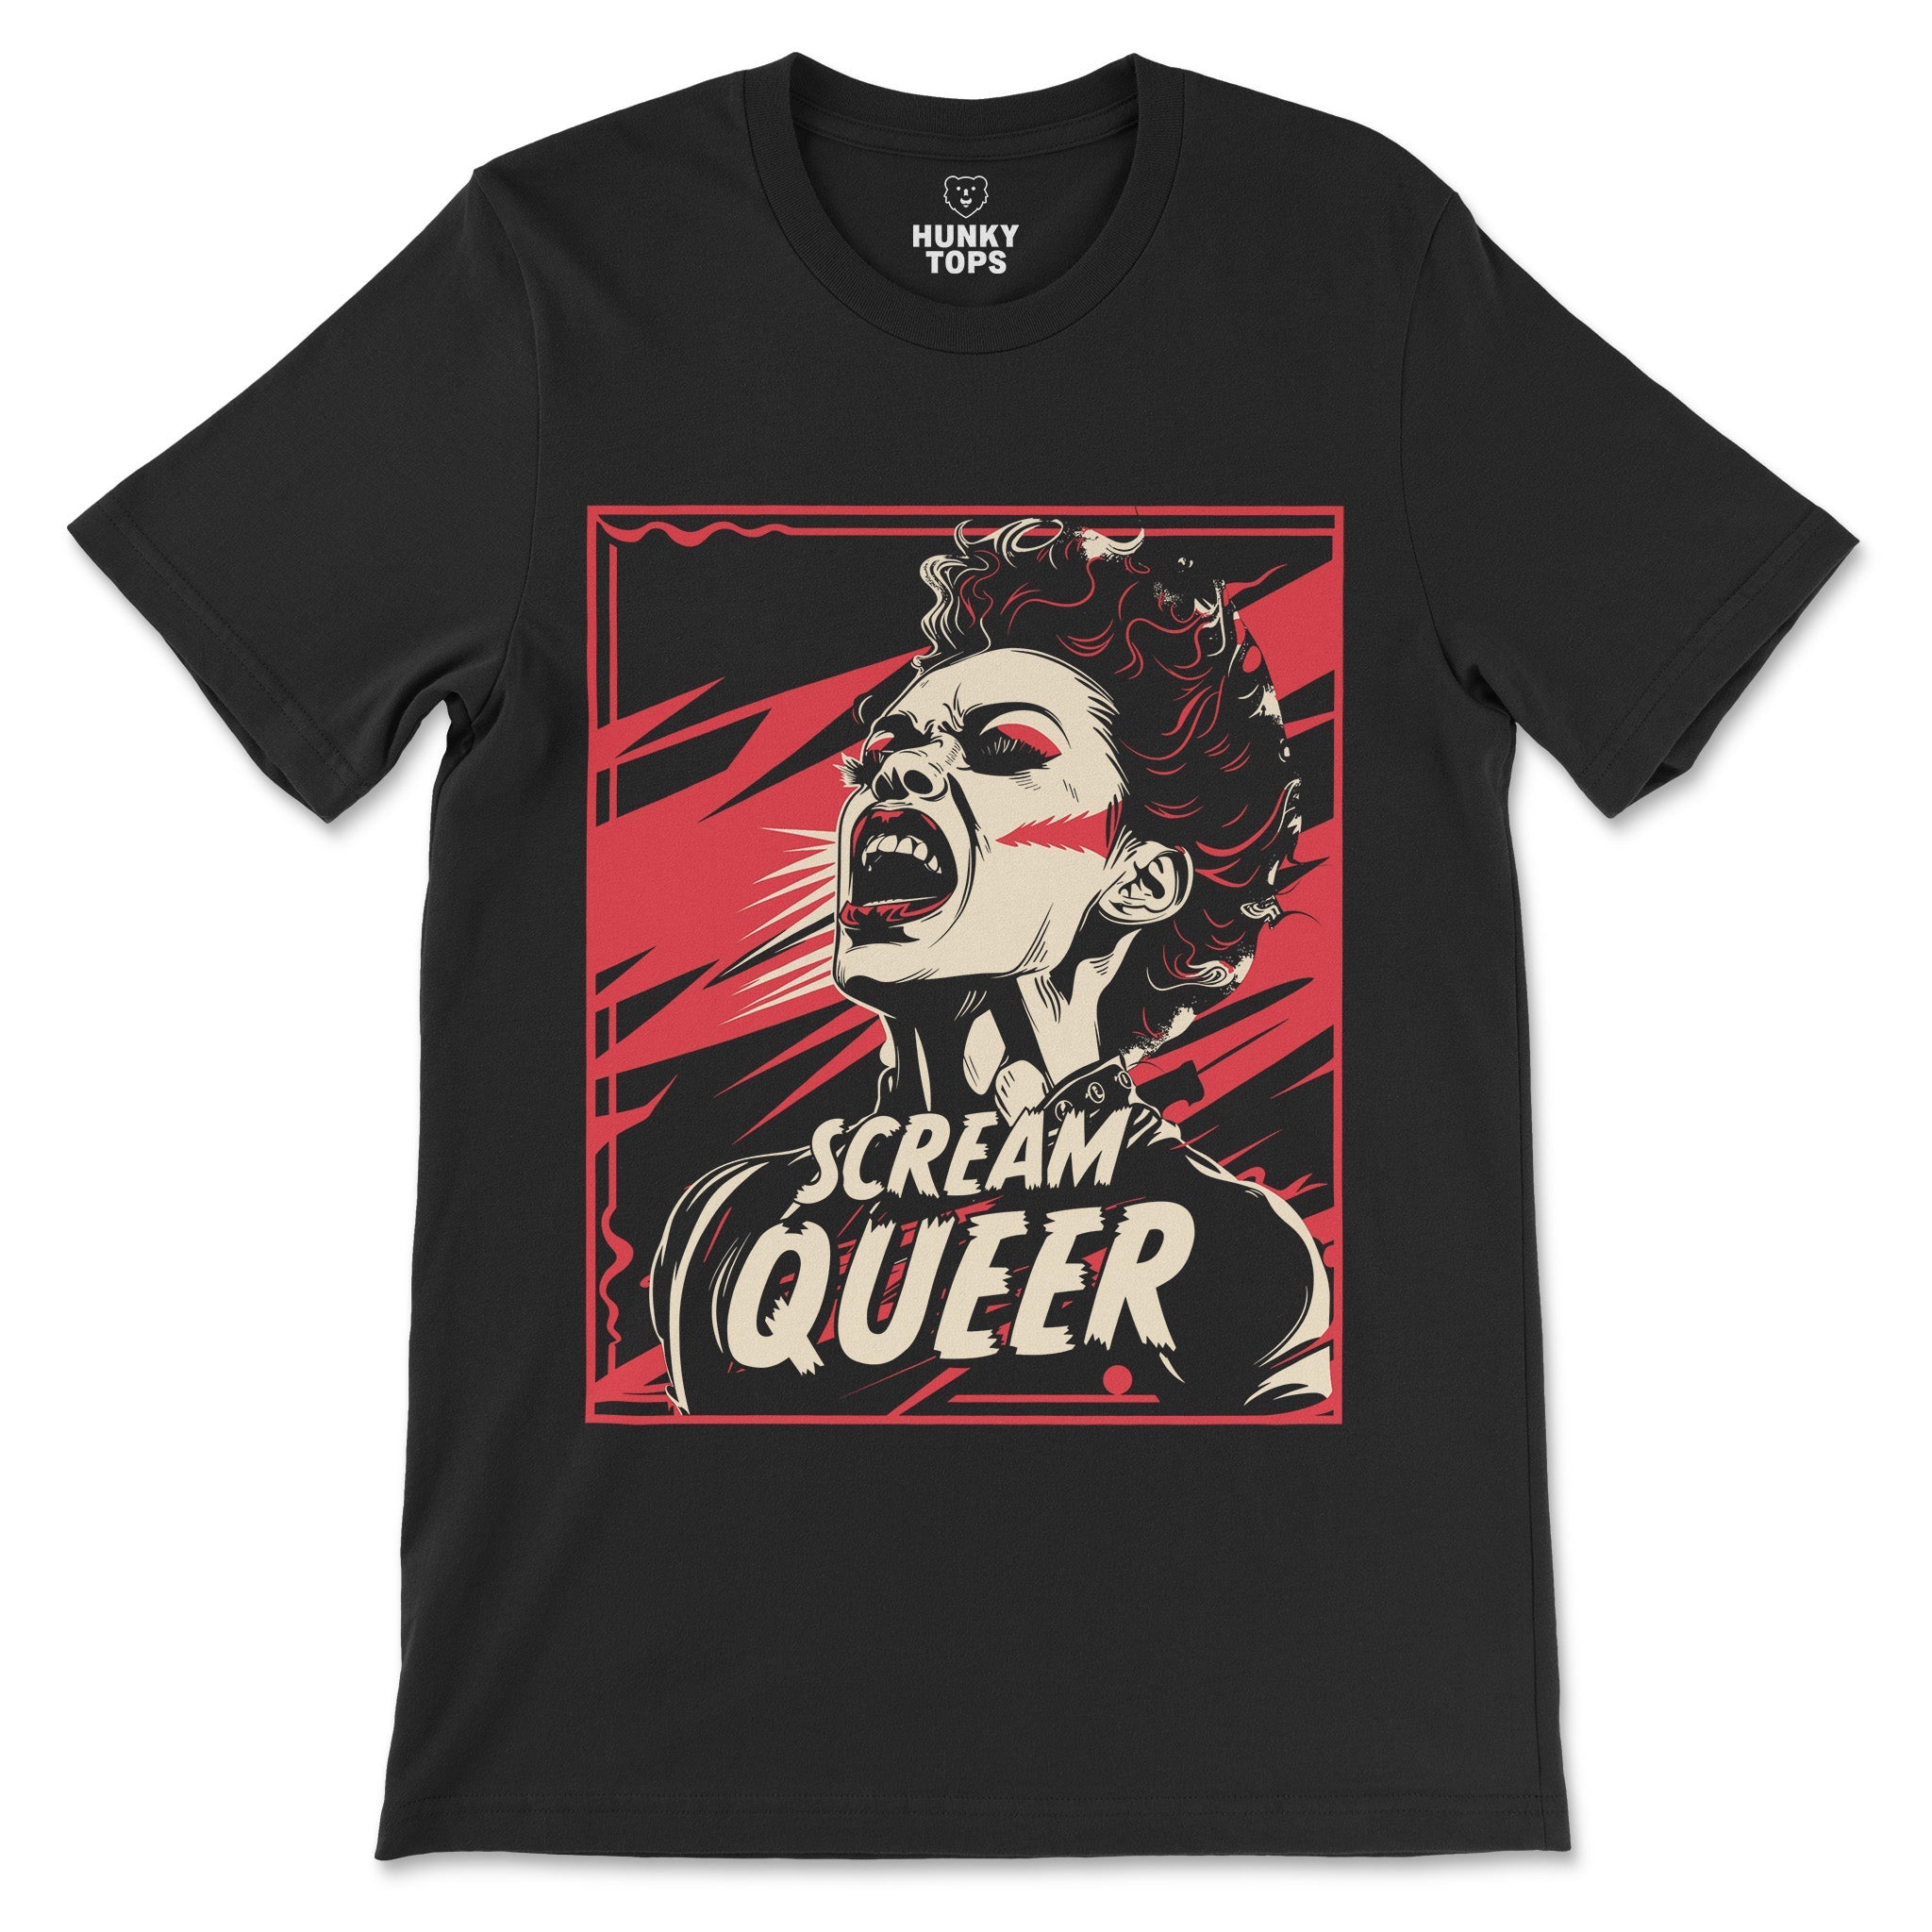 "Scream Queer" T-Shirt - LGBTQ Horror Fan Tee - Hunky Tops